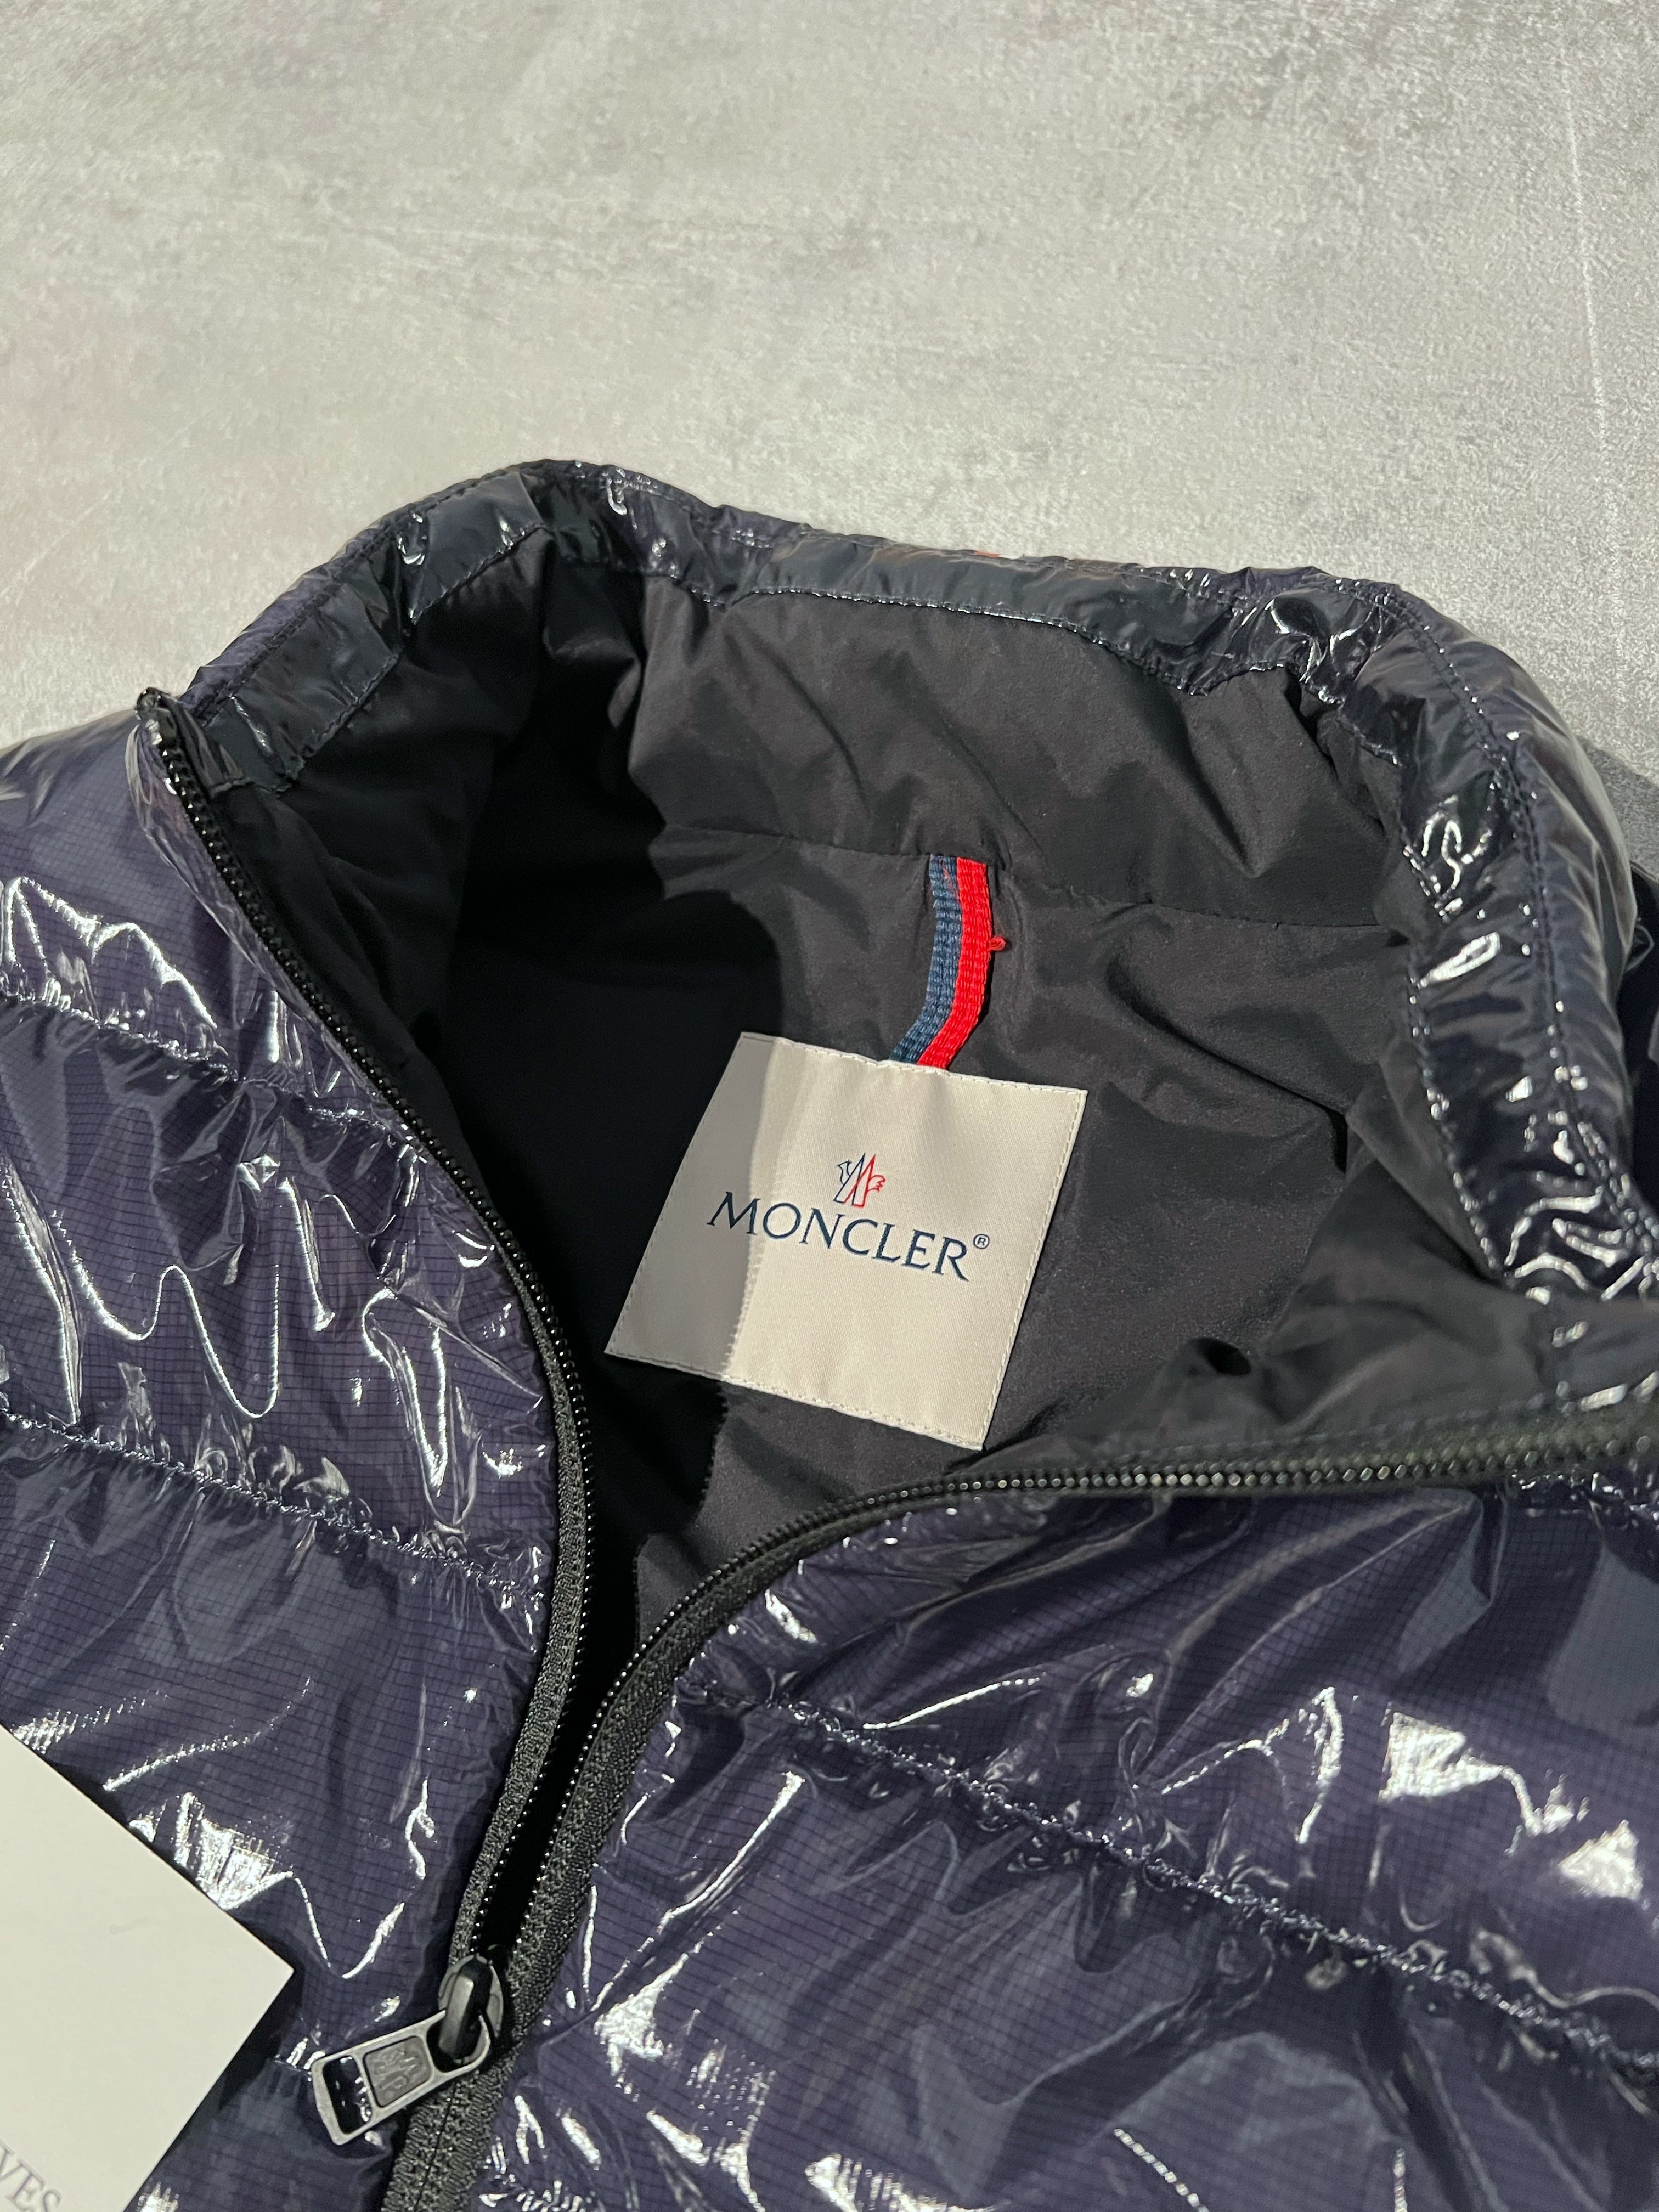 Moncler Agar Jacket - Size 2